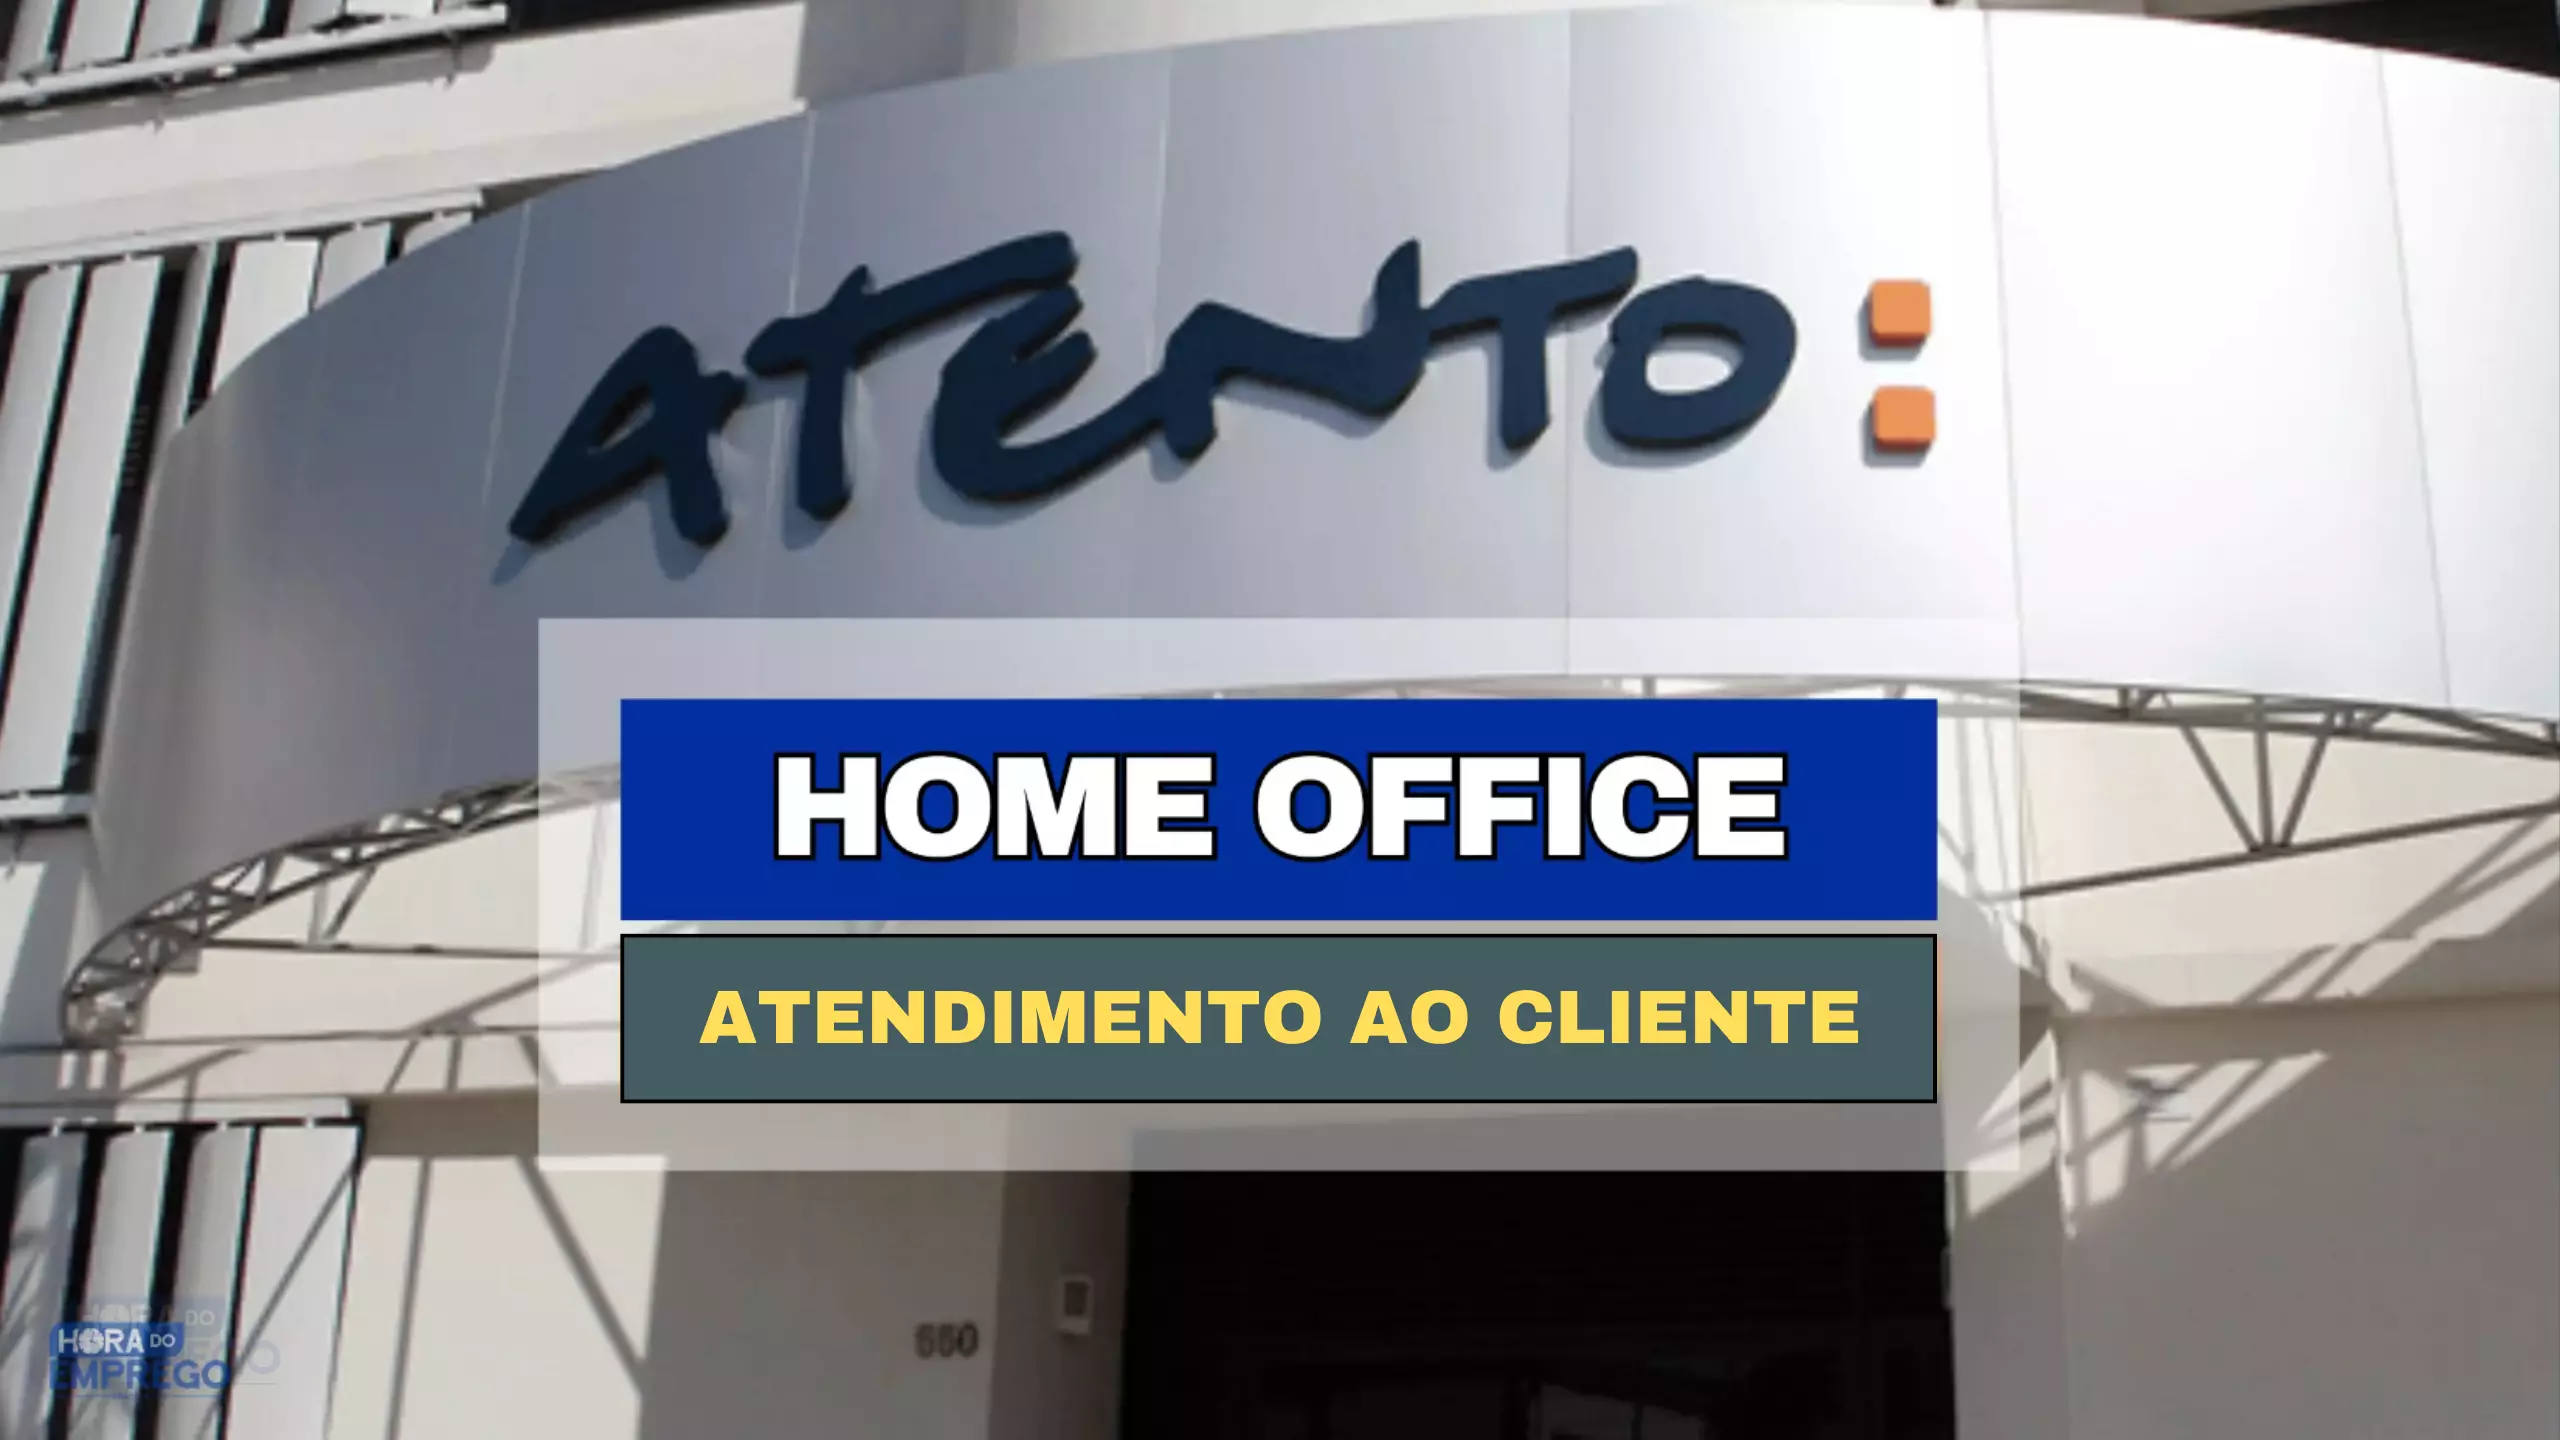 Atento Brasil abre vagas 100% HOME OFFICE para Atendimento ao Cliente e Oferece Treinamento